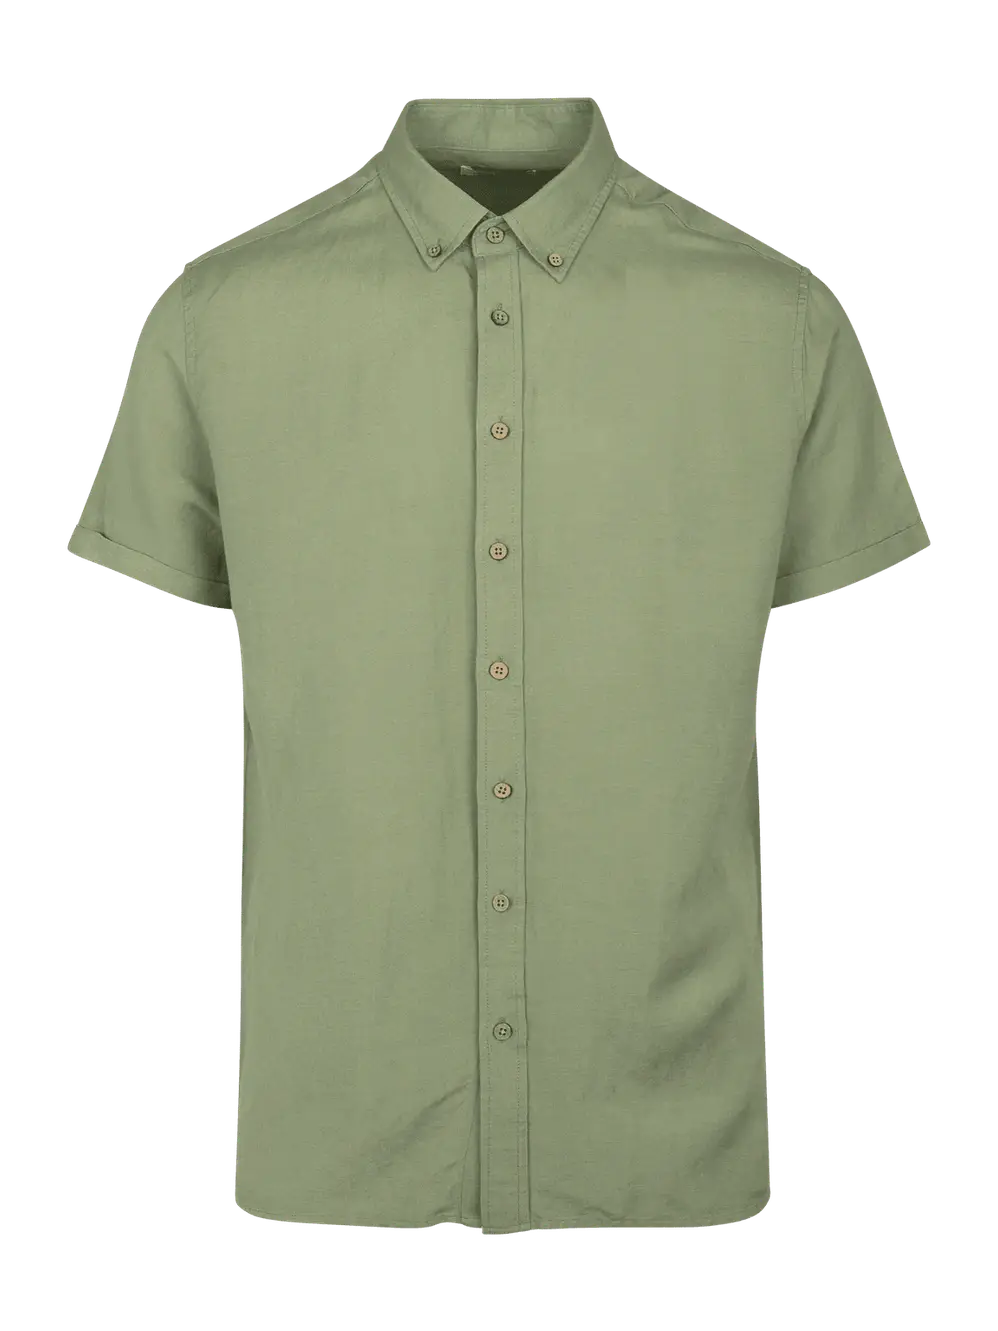  SkjorteUrban Pioneers Sawyer Shirt - Frosty Green